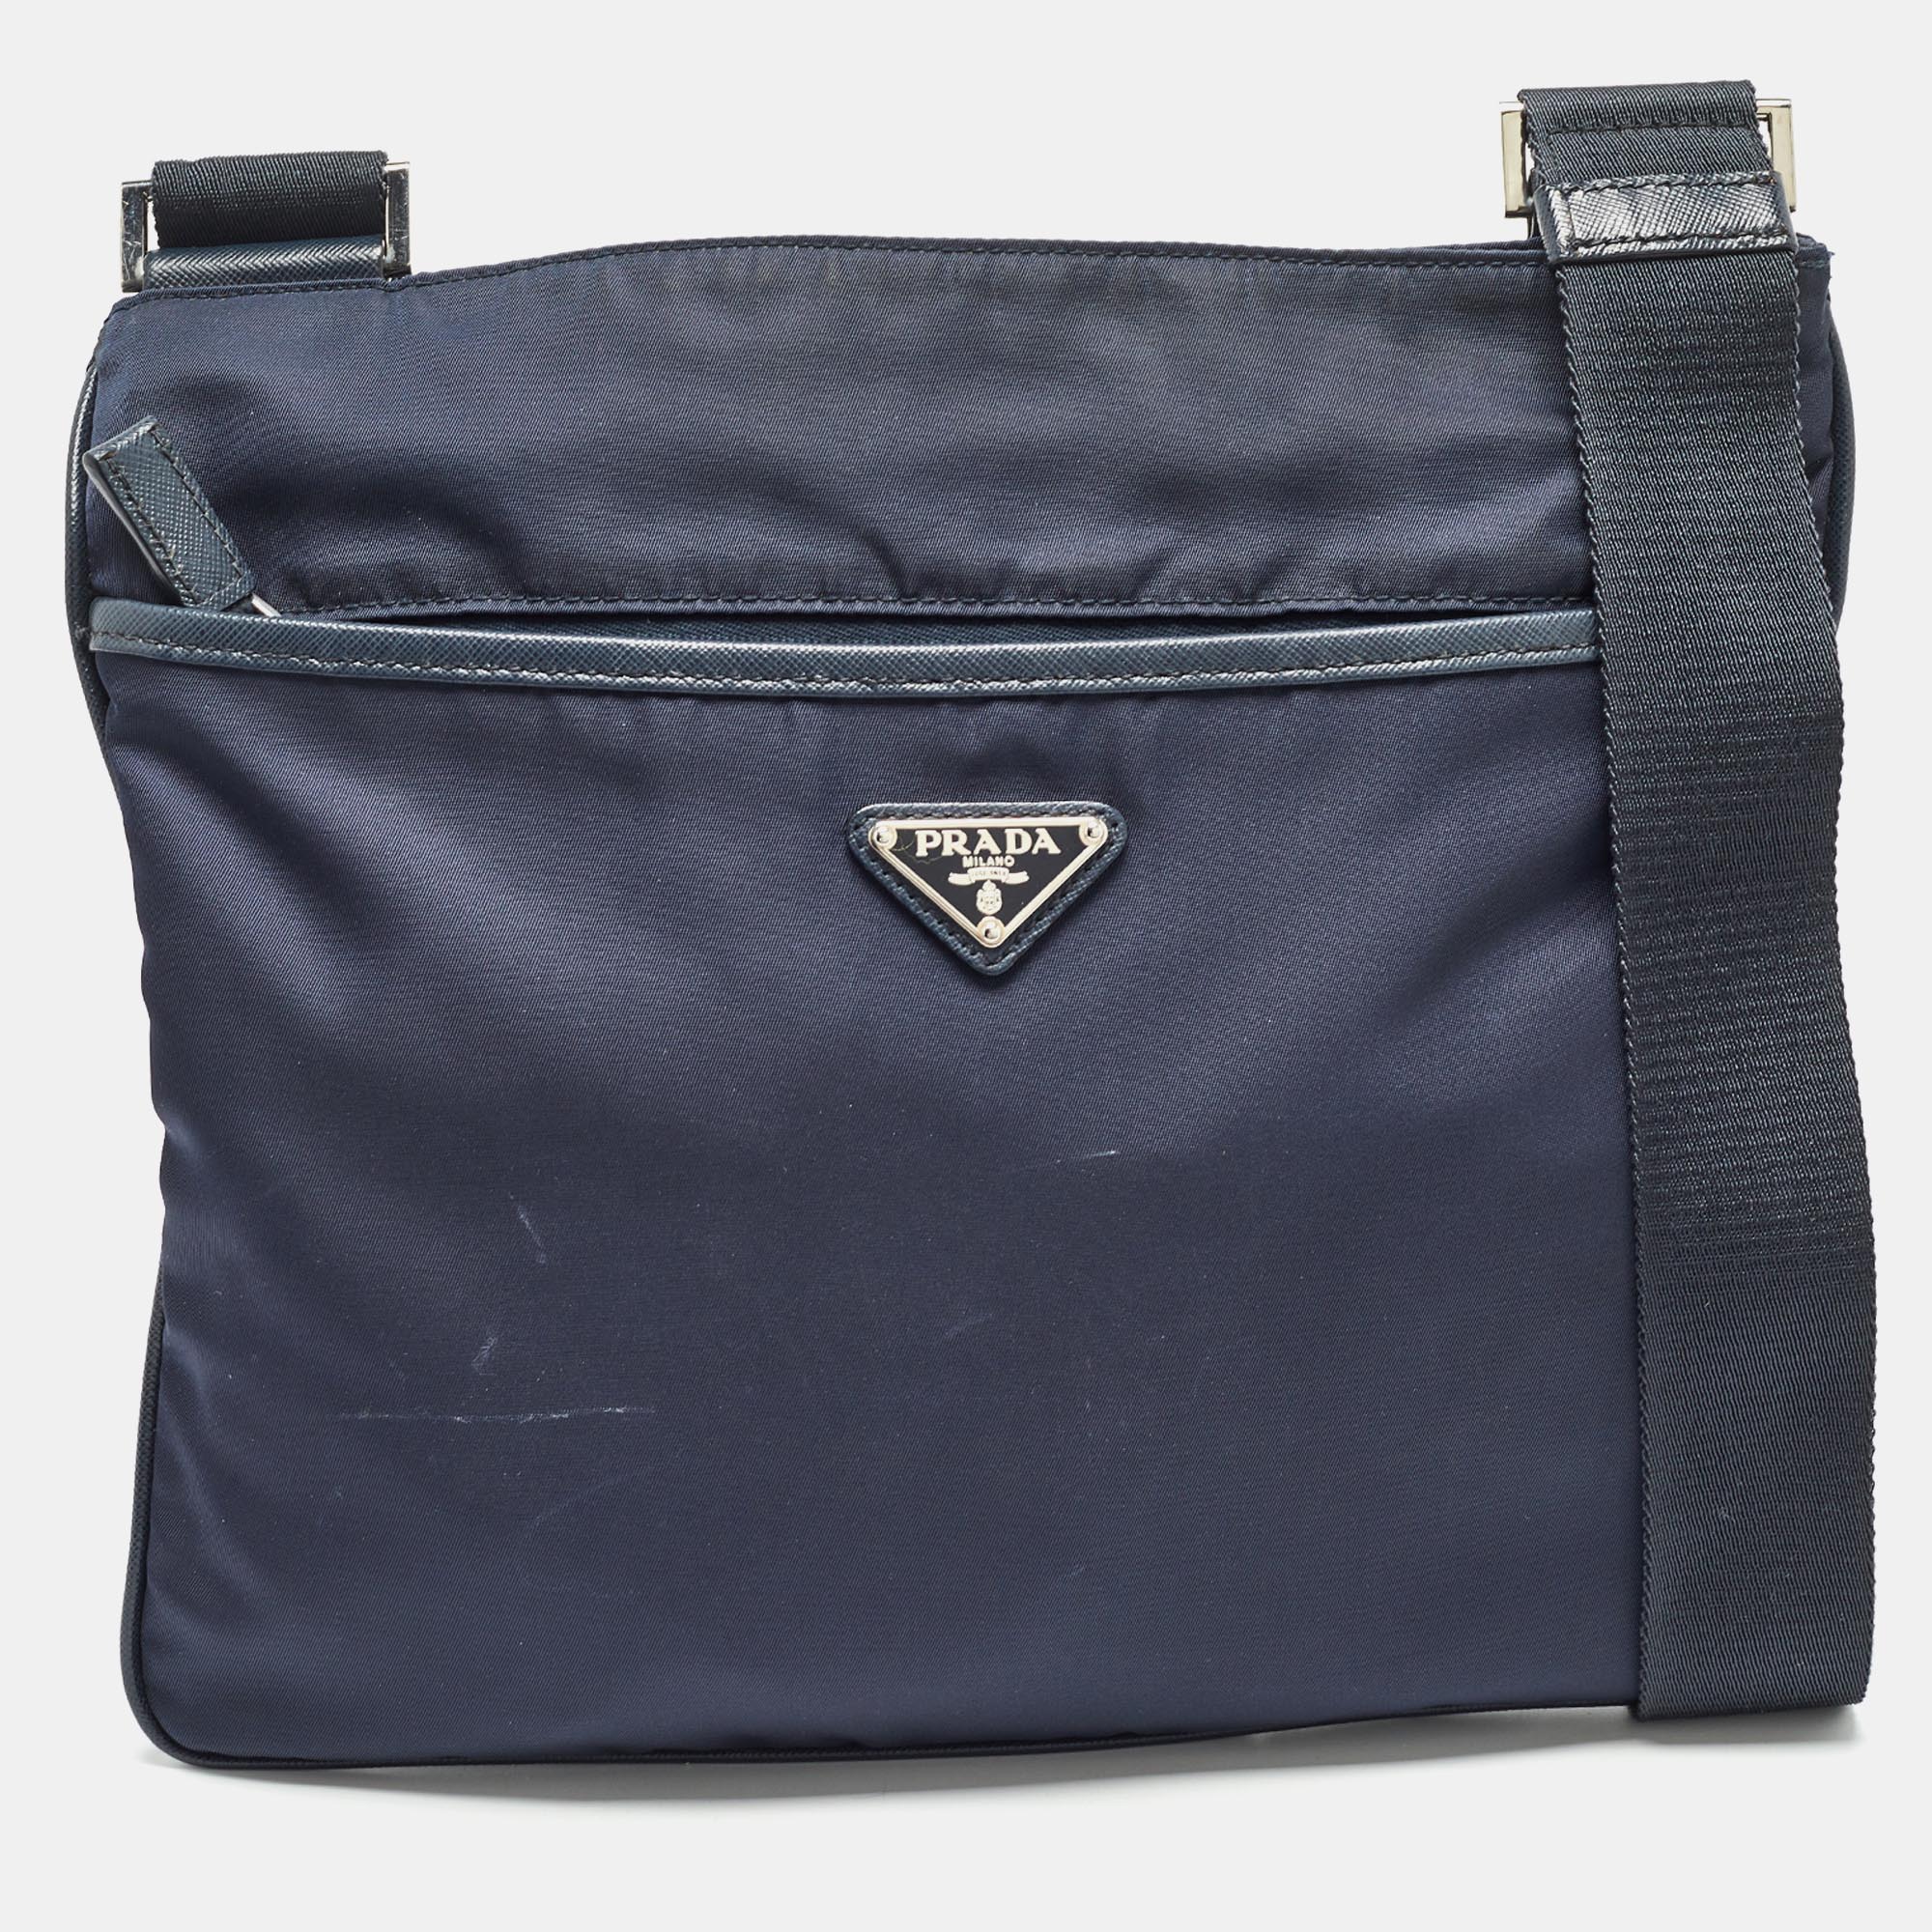 Prada Dark Blue Nylon and Leather Zip Messenger Bag